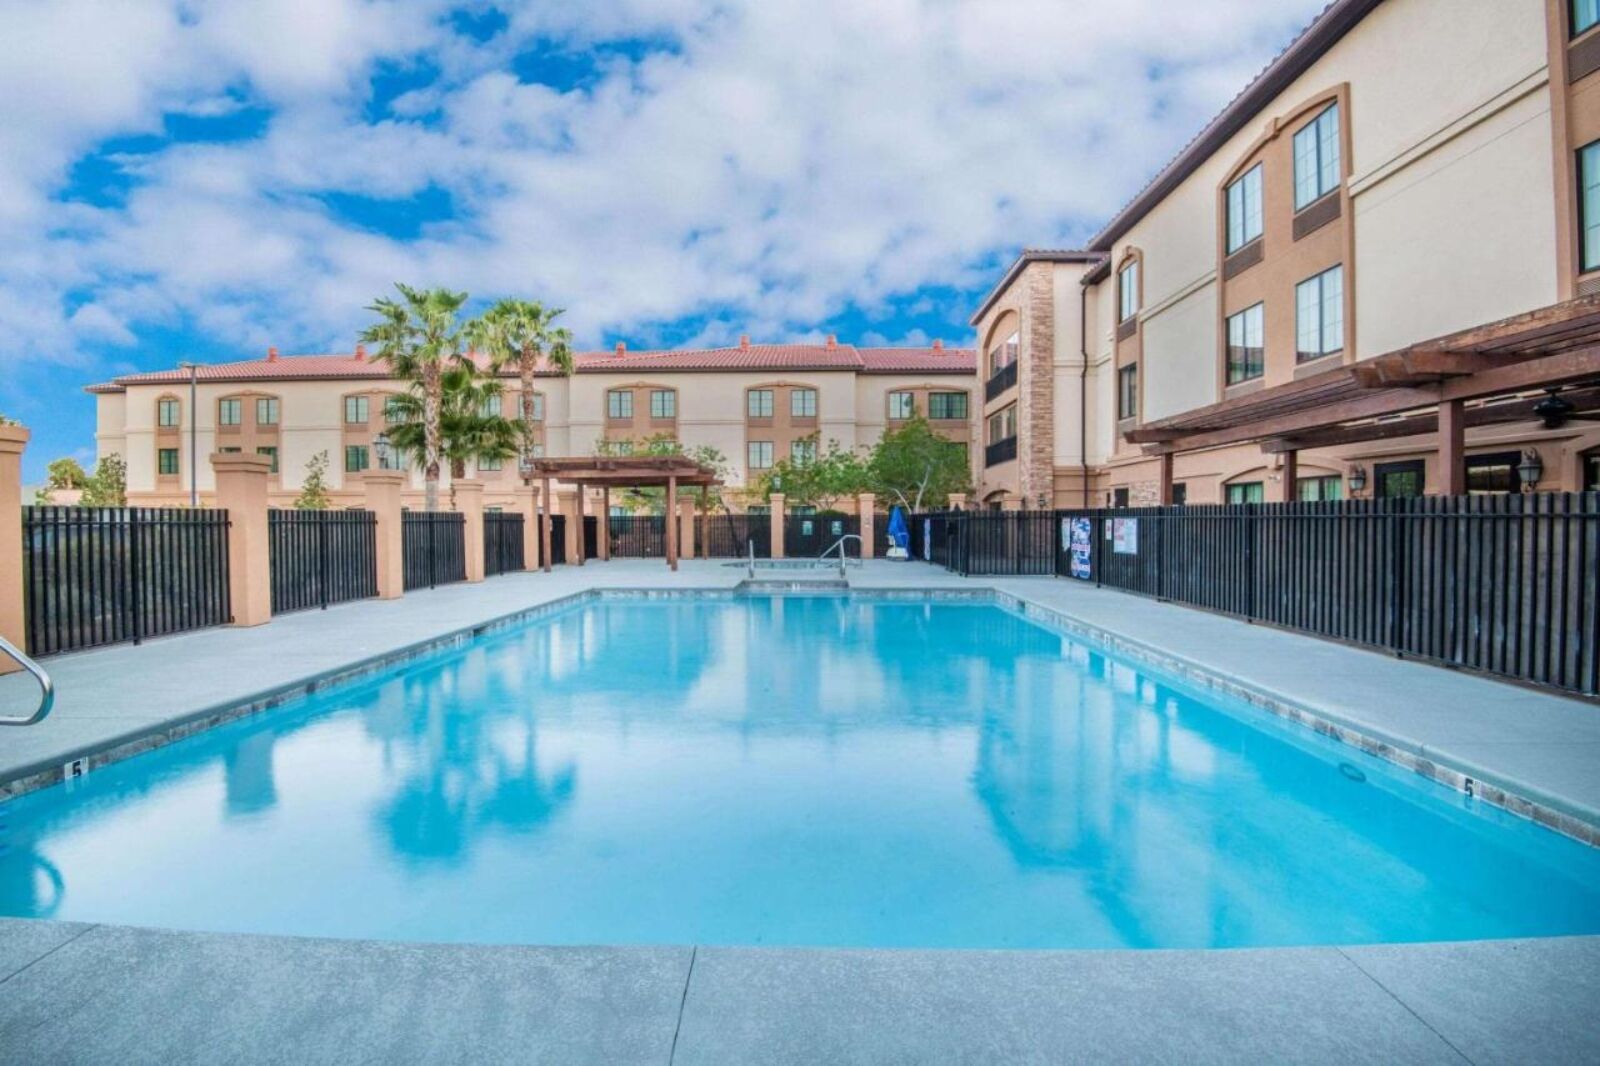 Pool at La Quinta Inn & Suites by Wyndham Las Vegas Airport South one of the best hotels near las vegas airport 